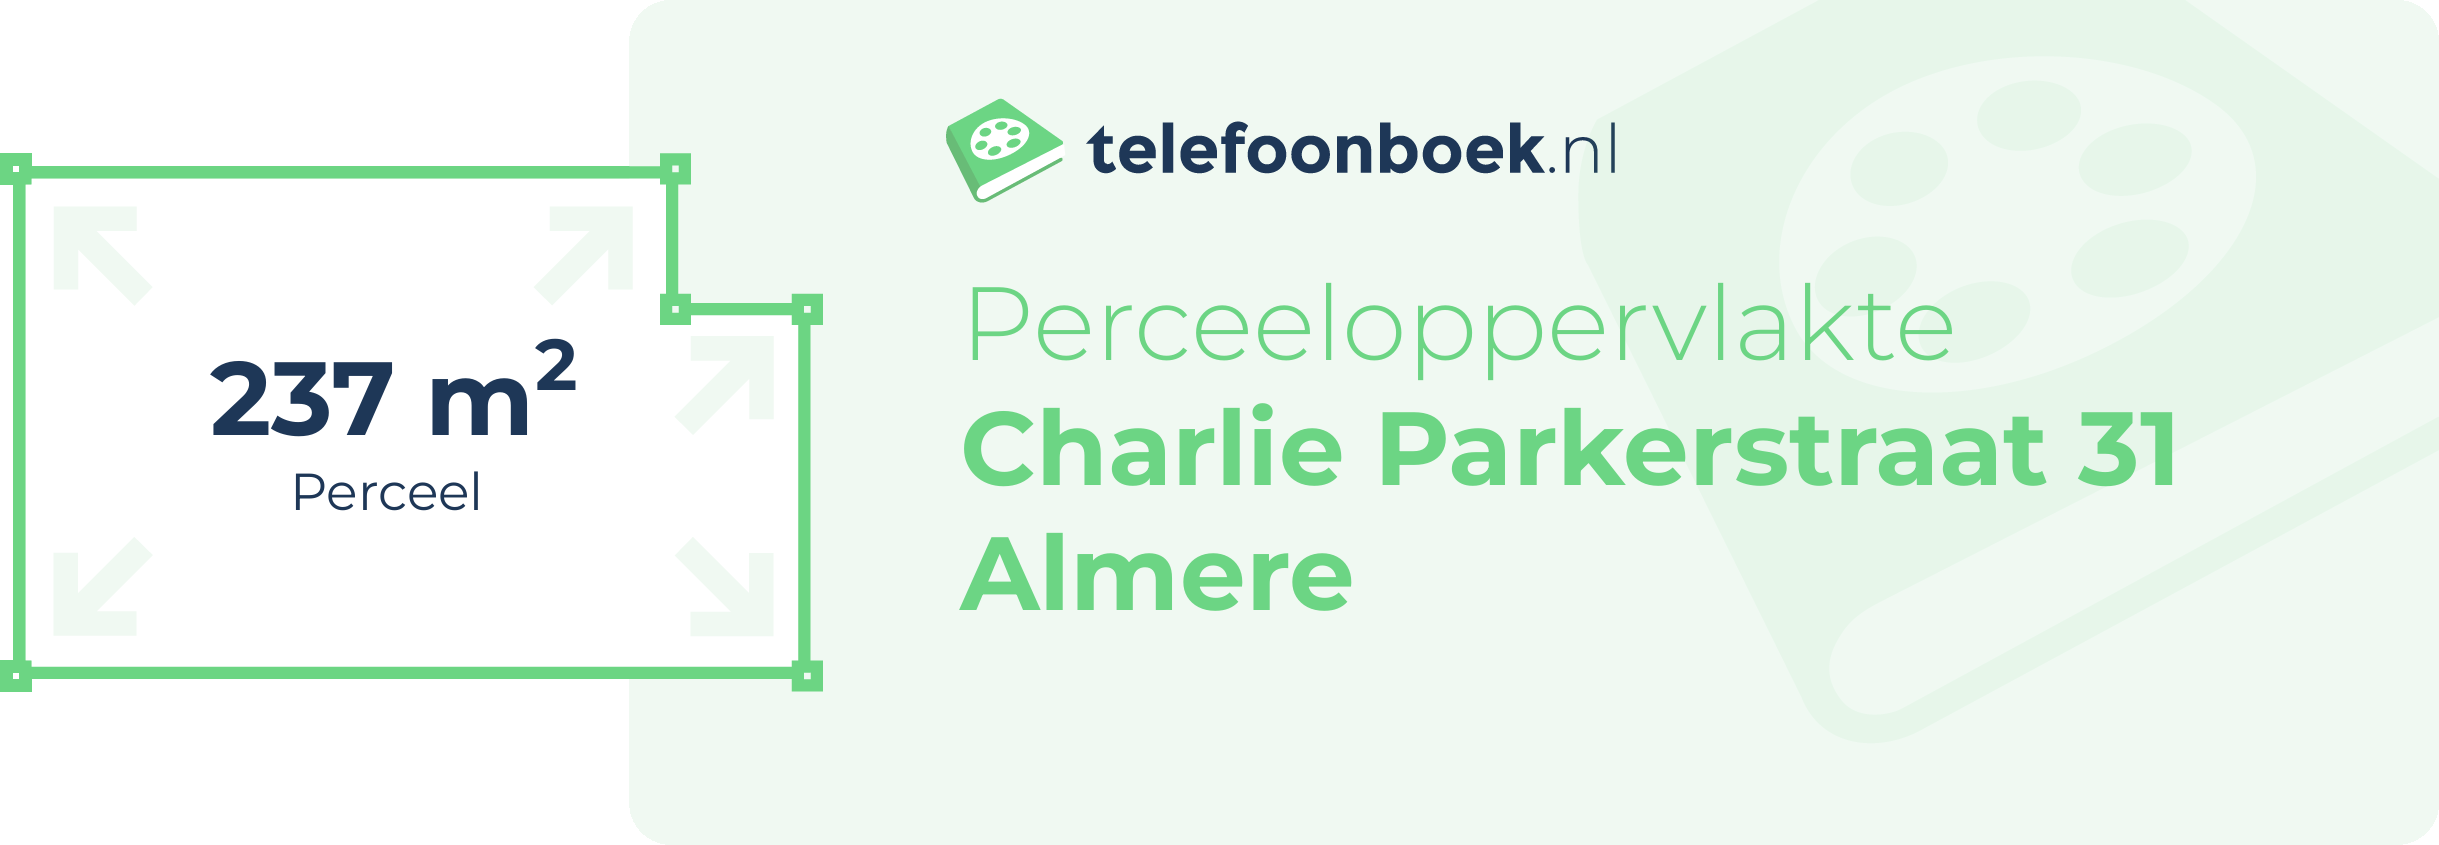 Perceeloppervlakte Charlie Parkerstraat 31 Almere